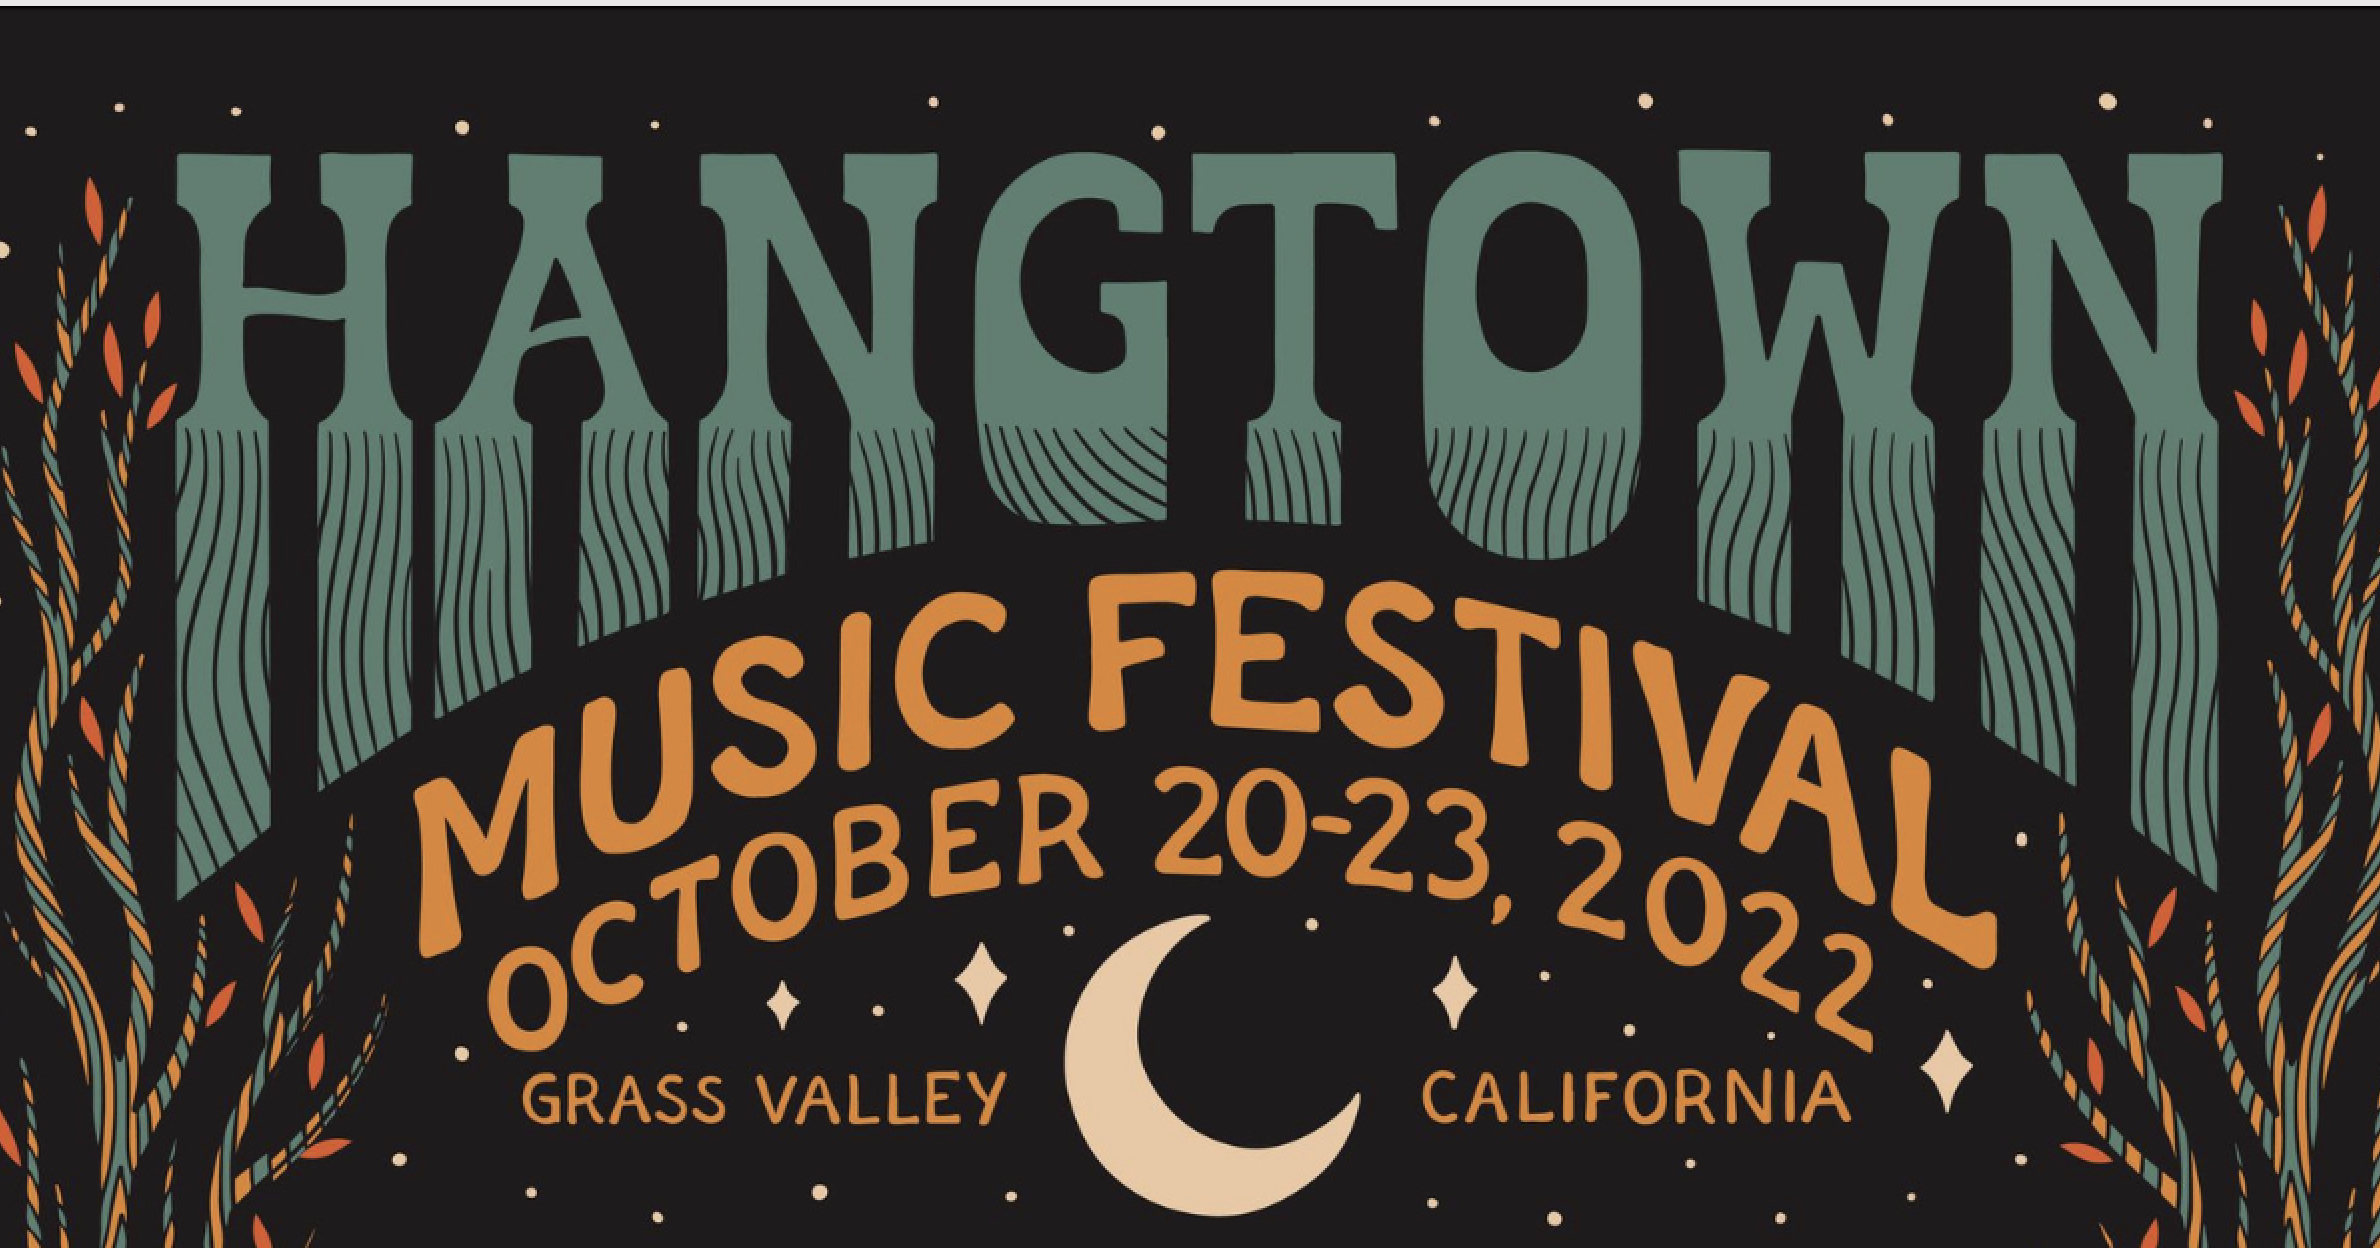 Hangtown Music Festival Shares Final Artist Lineup Railroad Earth